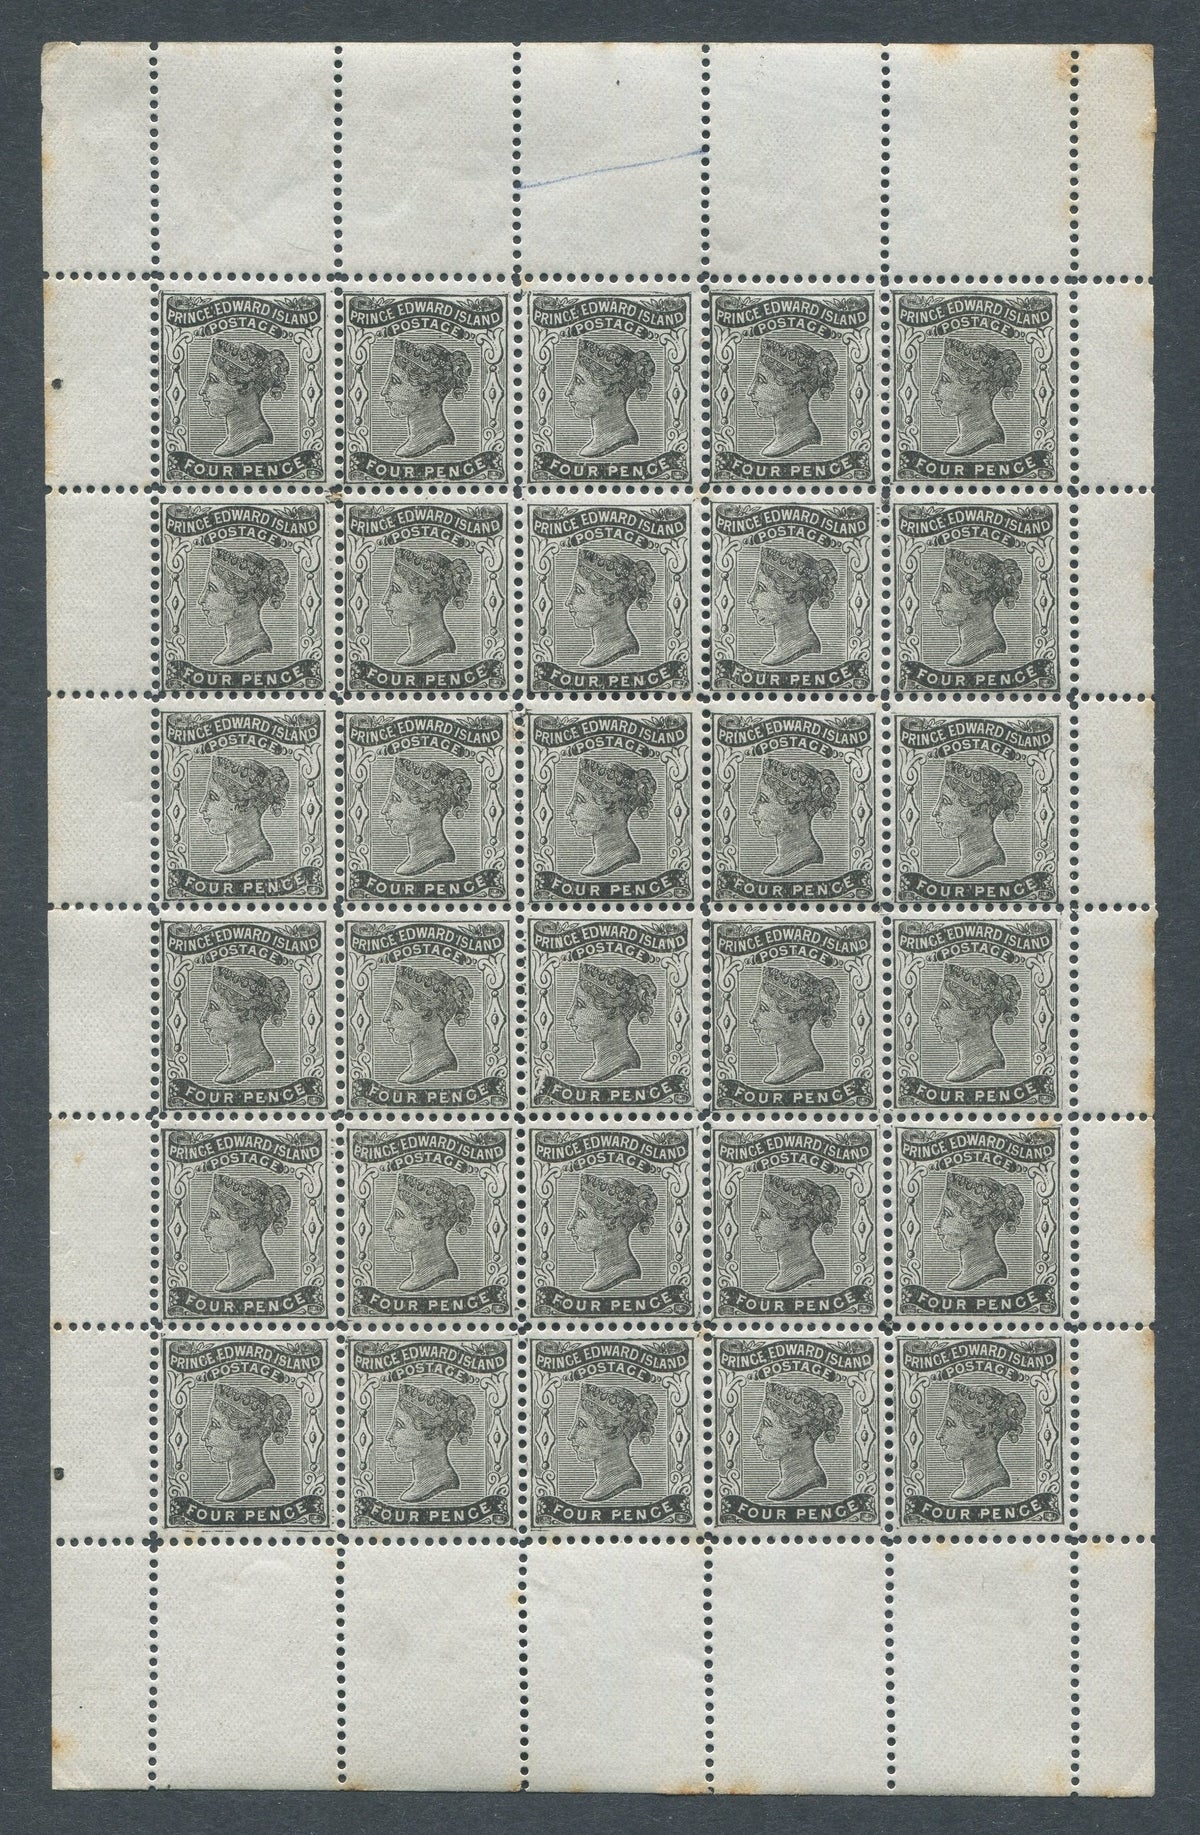 0009PE1708 - Prince Edward Island #9 - Mint Full Sheet of 30 - Deveney Stamps Ltd. Canadian Stamps